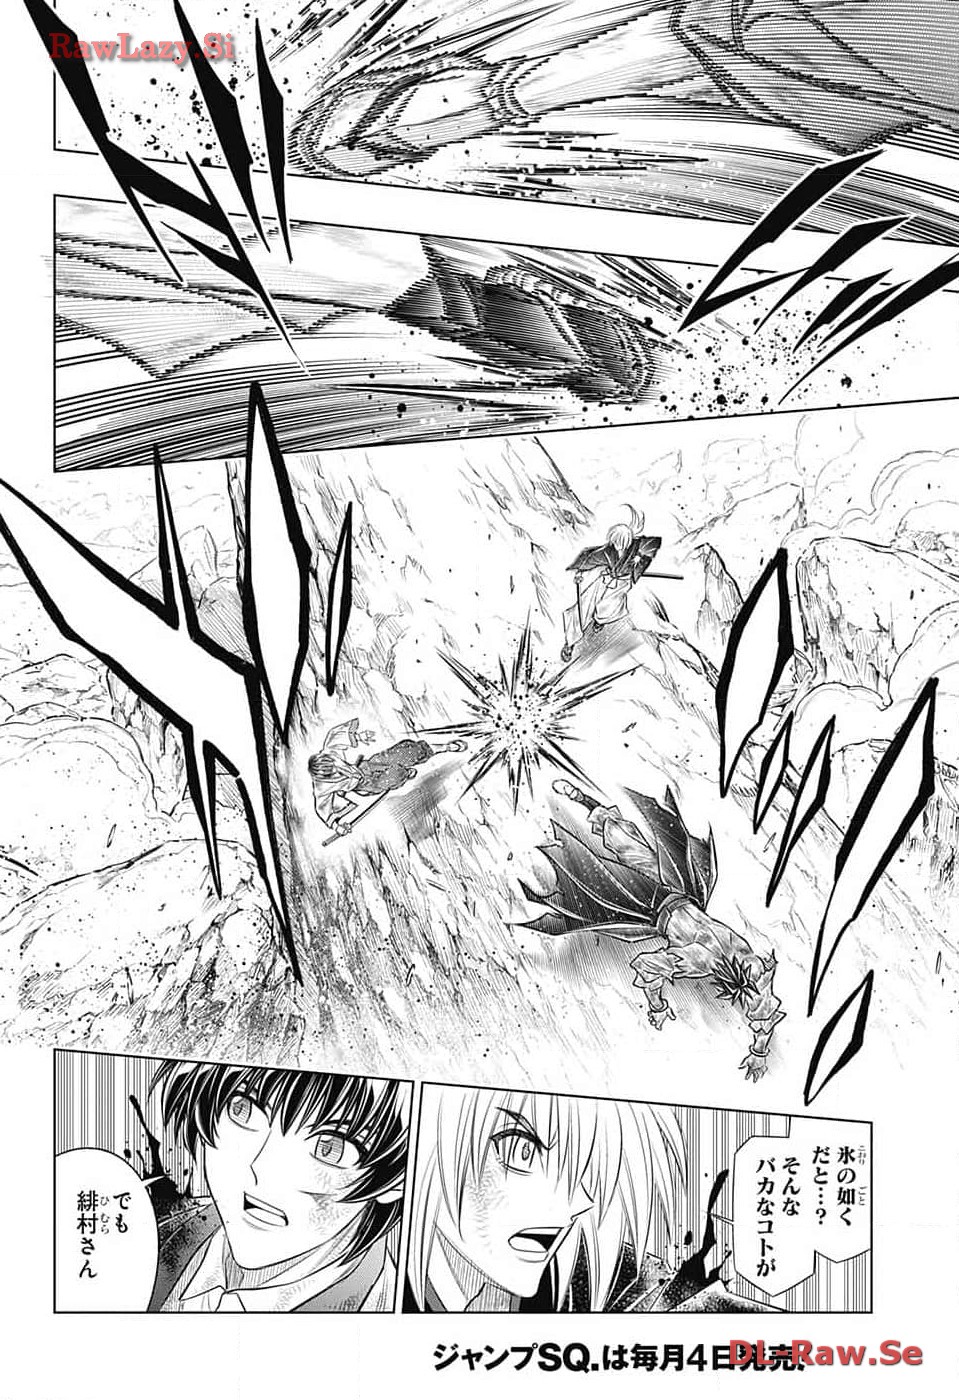 Rurouni Kenshin: Meiji Kenkaku Romantan: Hokkaidou Hen - Chapter 59 - Page 2